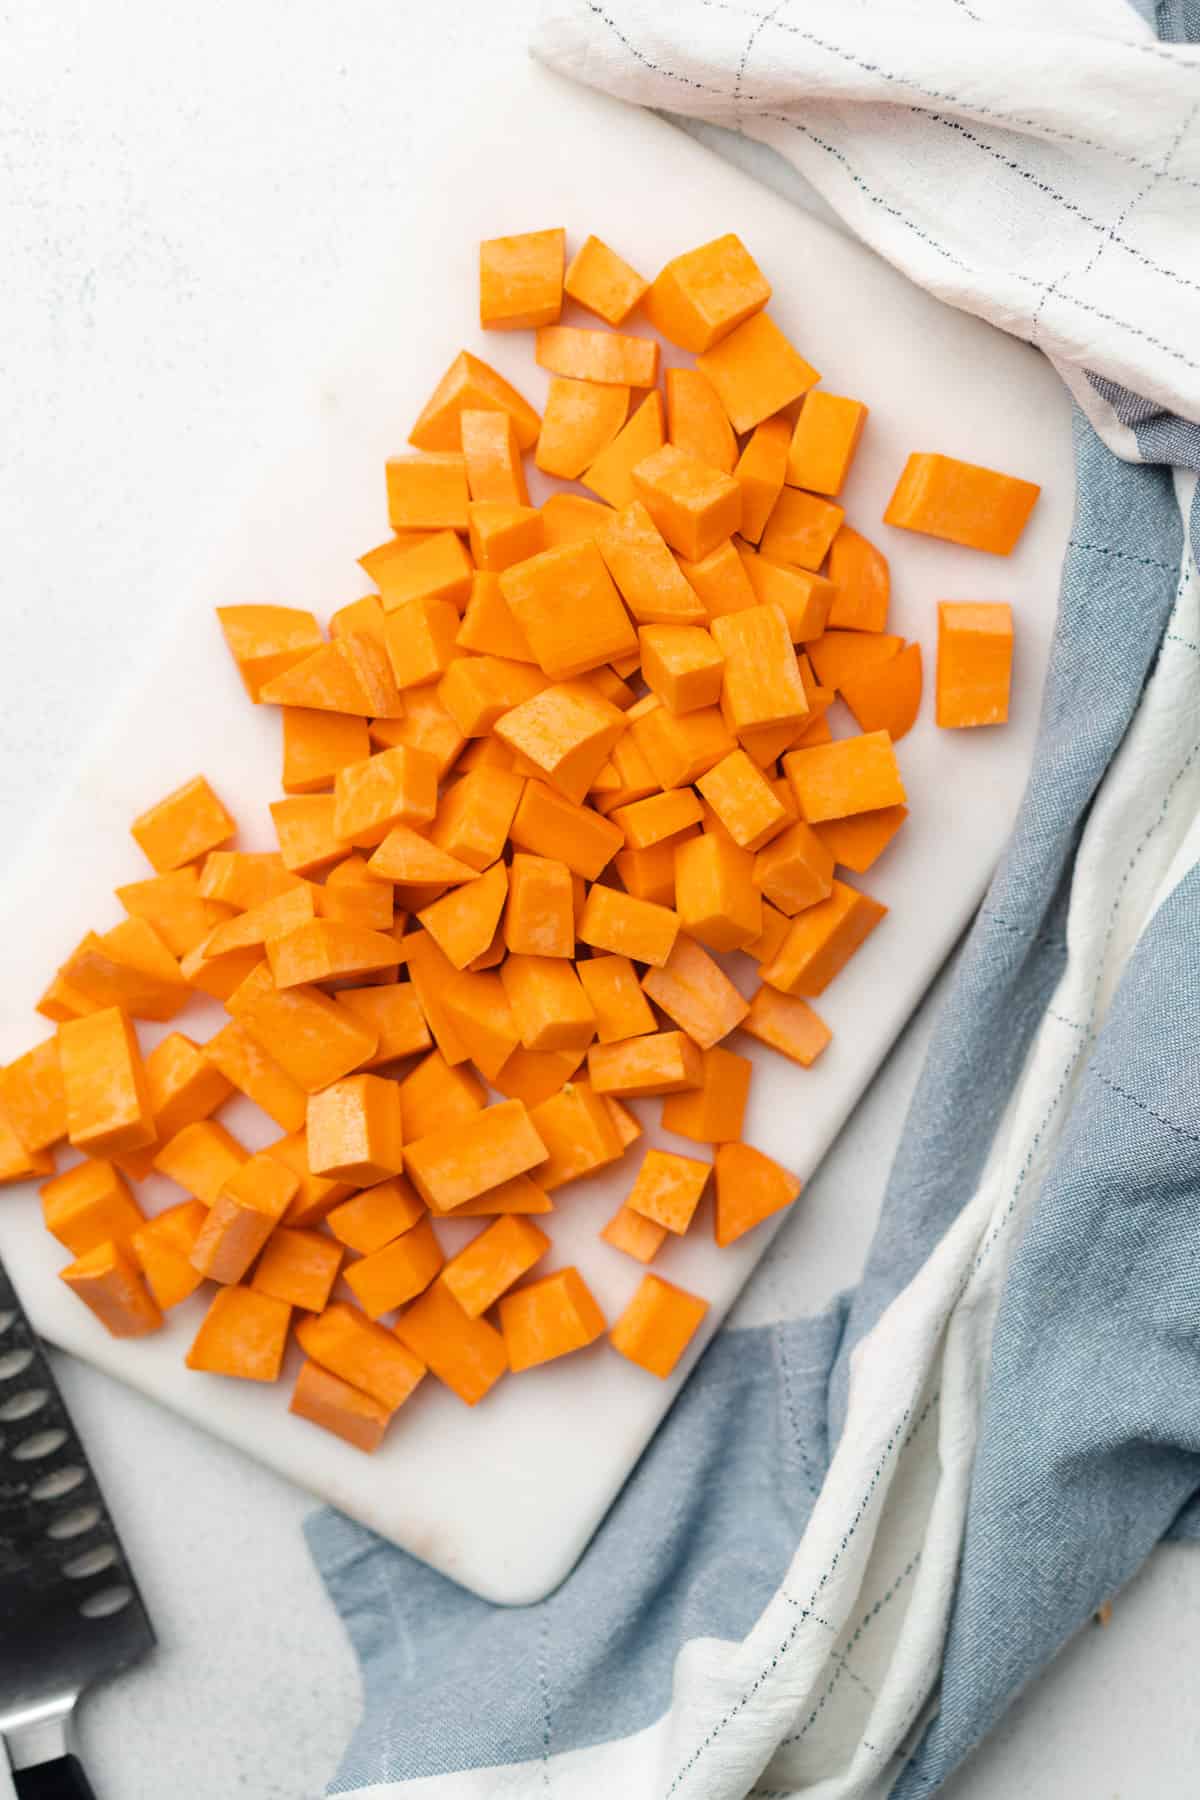 sweet potatoes cut into chunks on a cutting board